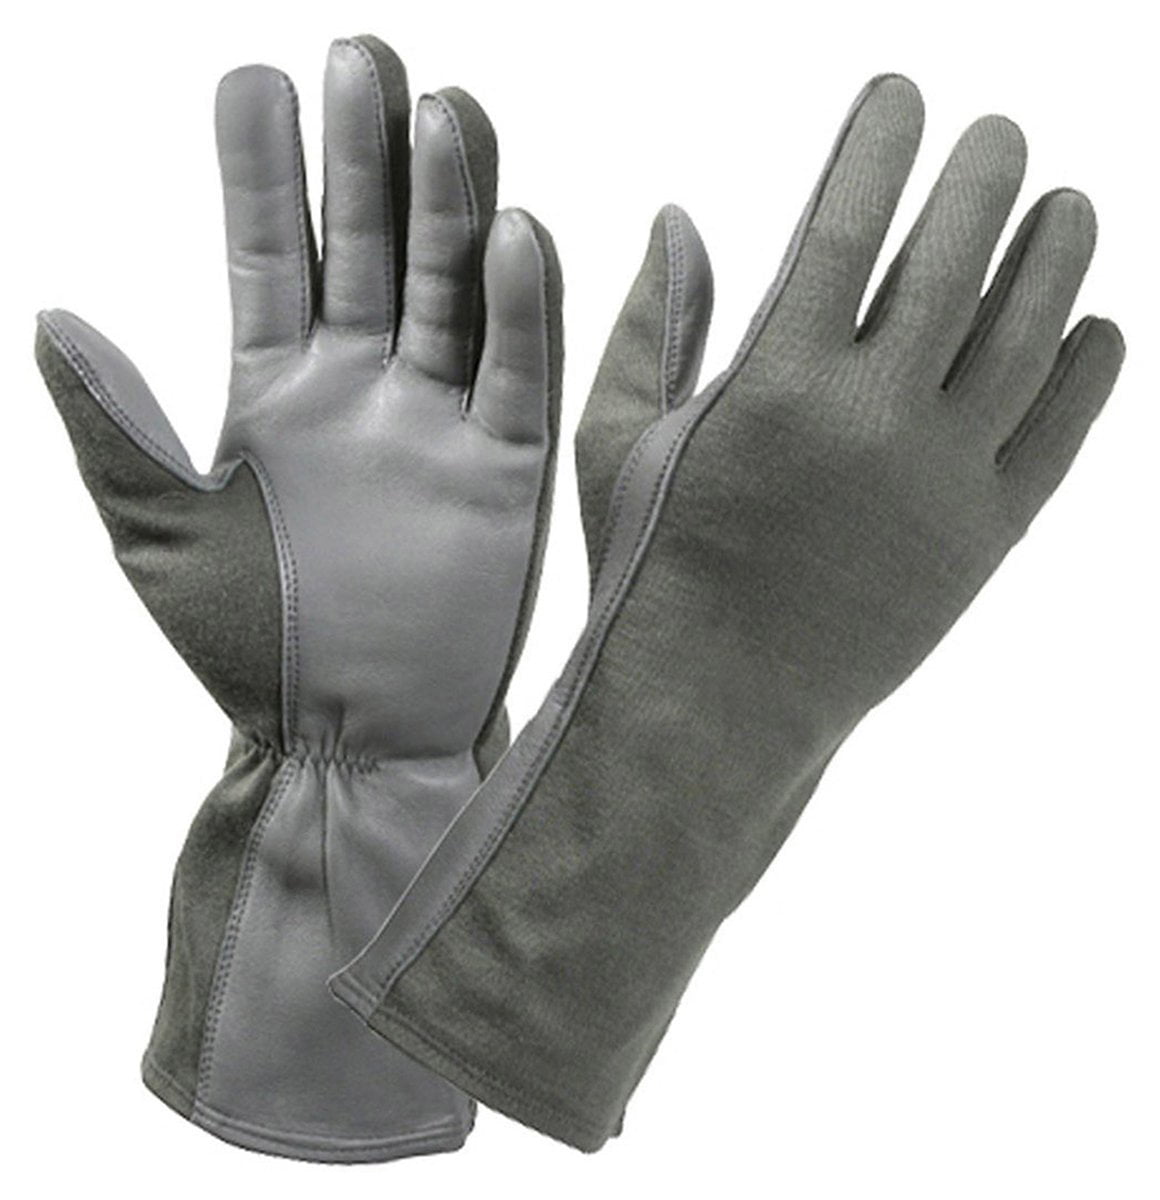 Black Fire Resistant Griplast Military Gloves 4421 Rothco 